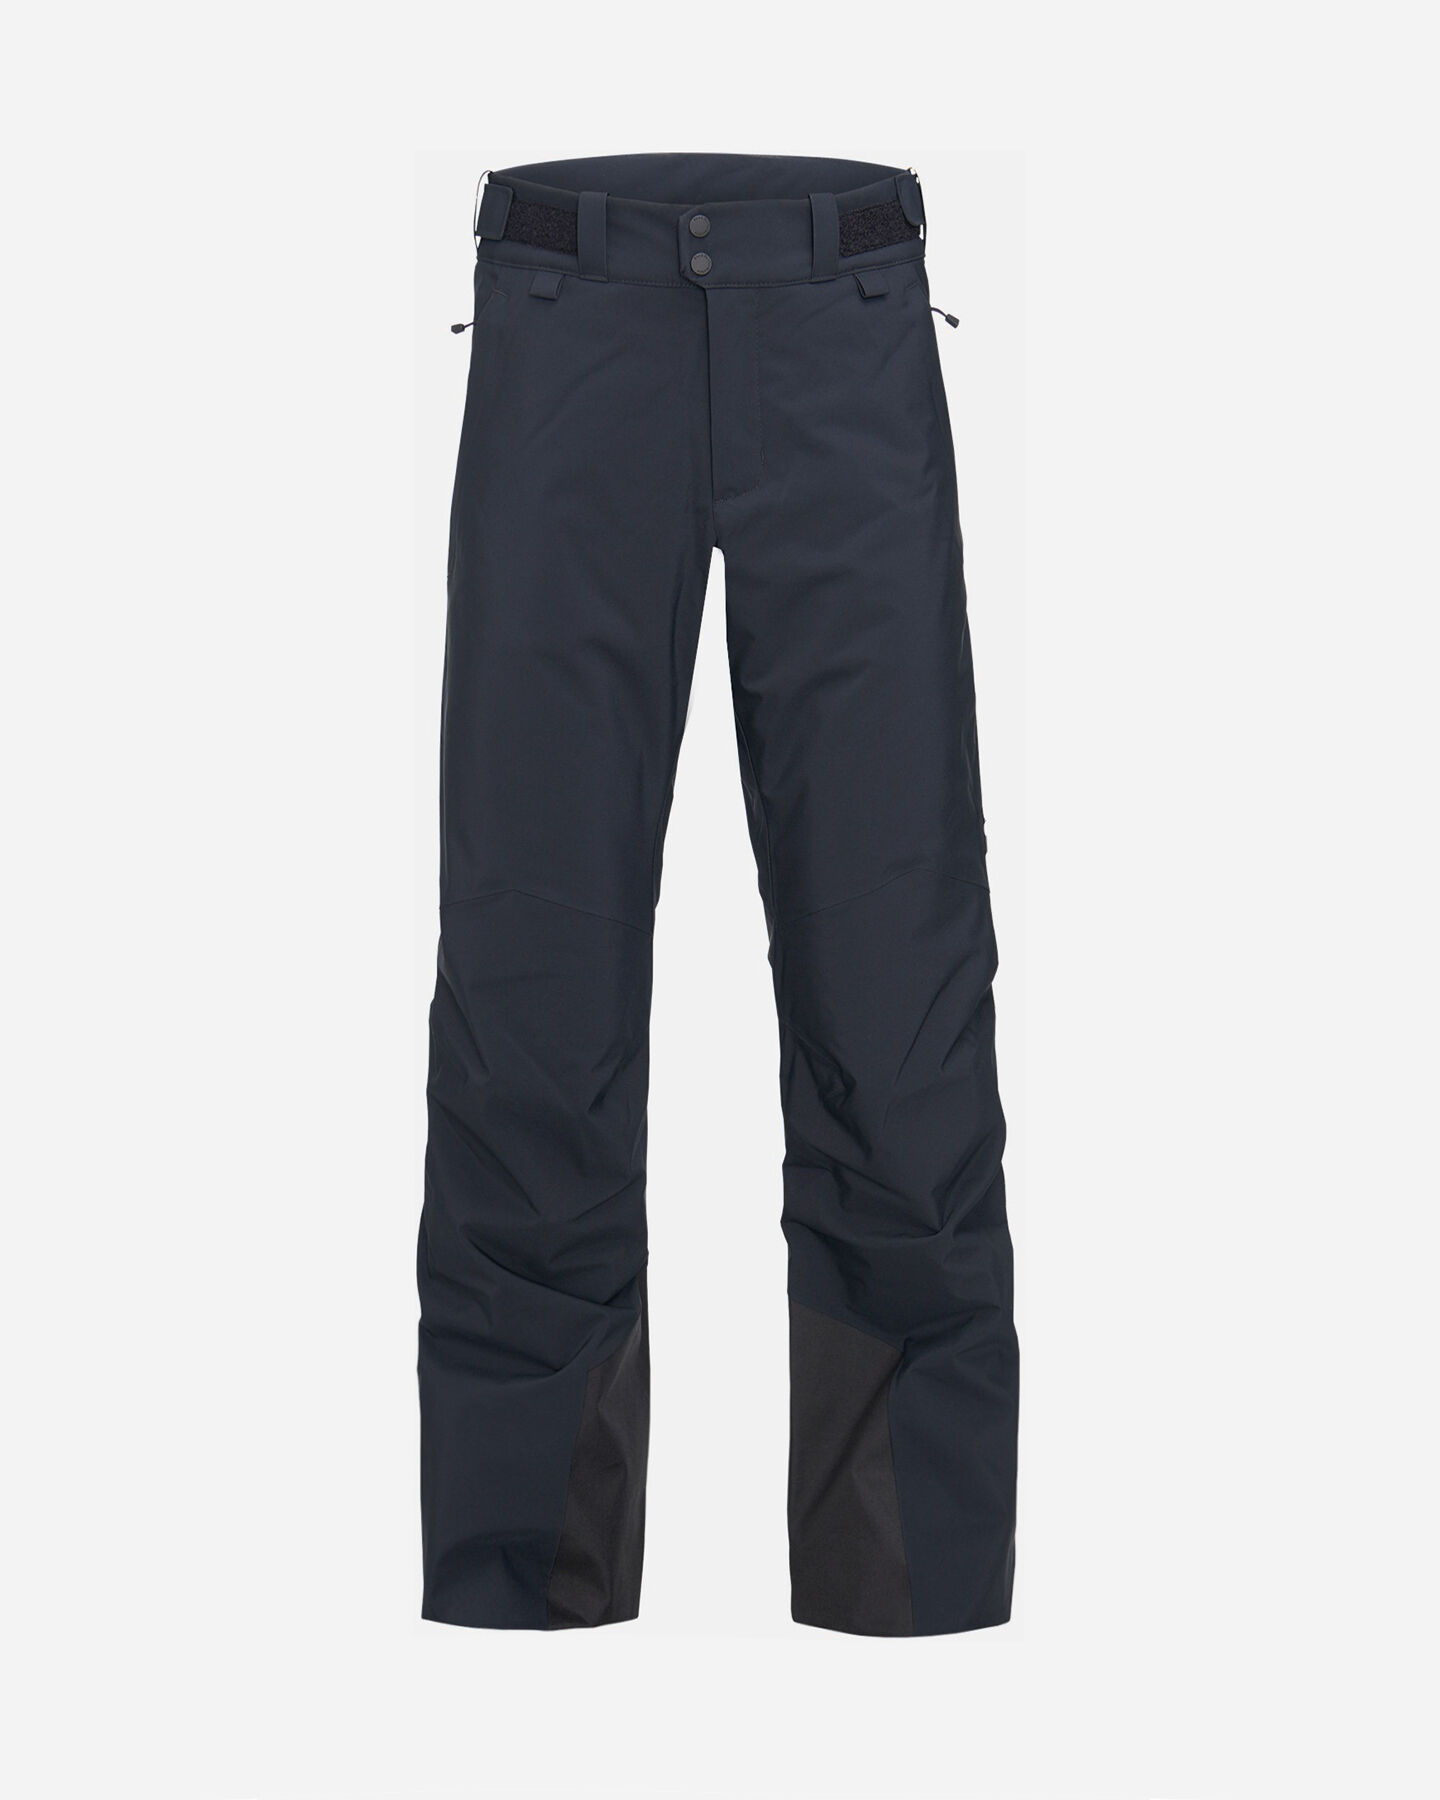  Pantalone sci PEAK PERFORMANCE MAROON M S4099101|1|S scatto 0